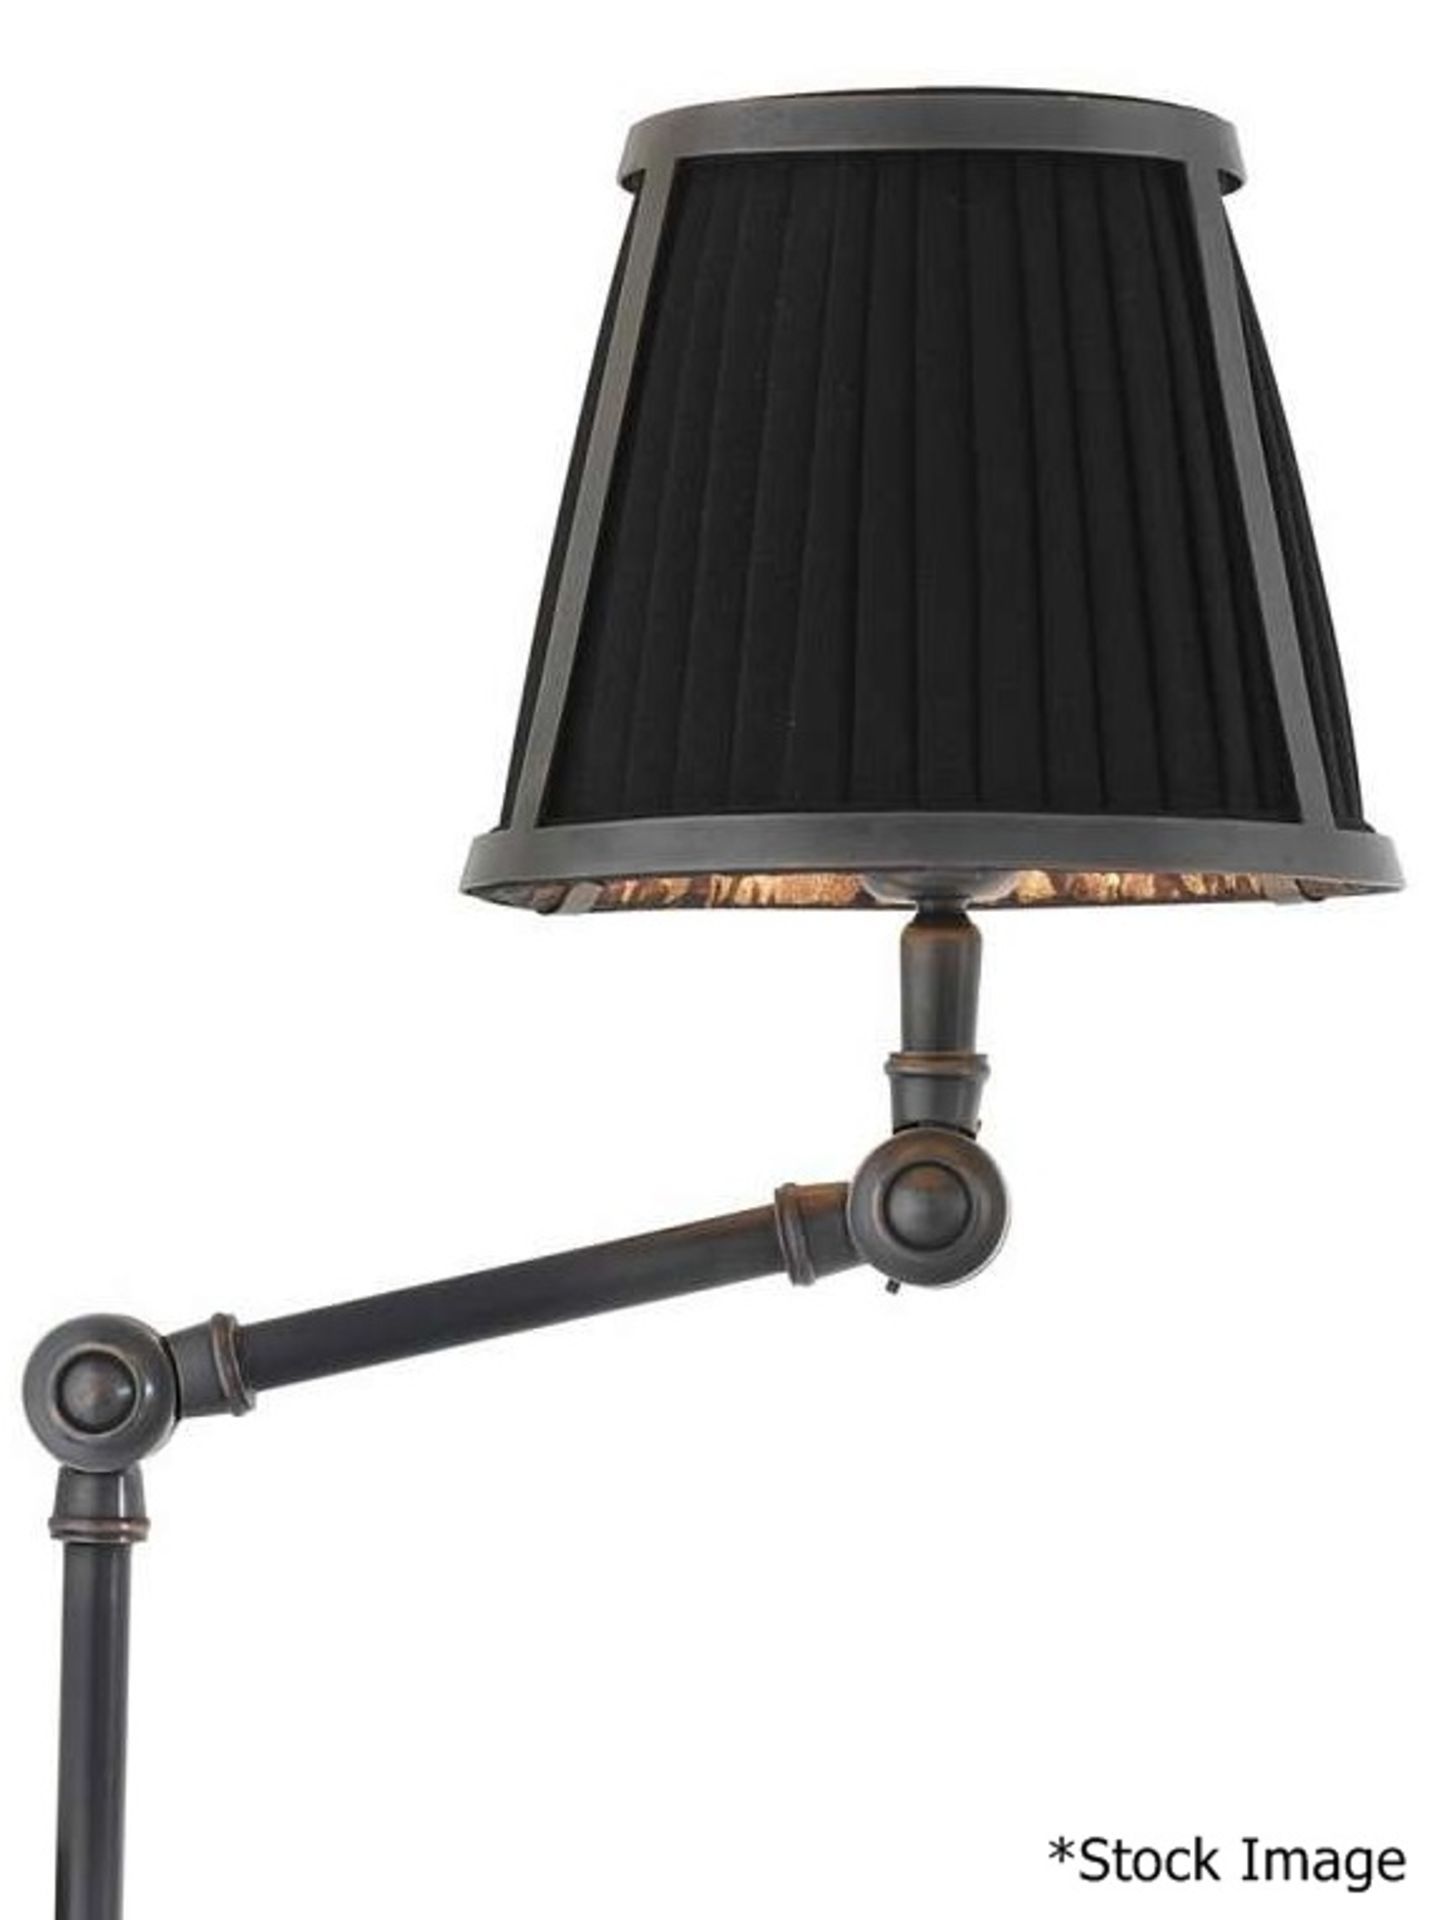 1 x EICHHOLTZ 'Brunswick' Luxury Wall Lamp With A Black Bronze Finish - Original Price £515.00 - Image 2 of 10